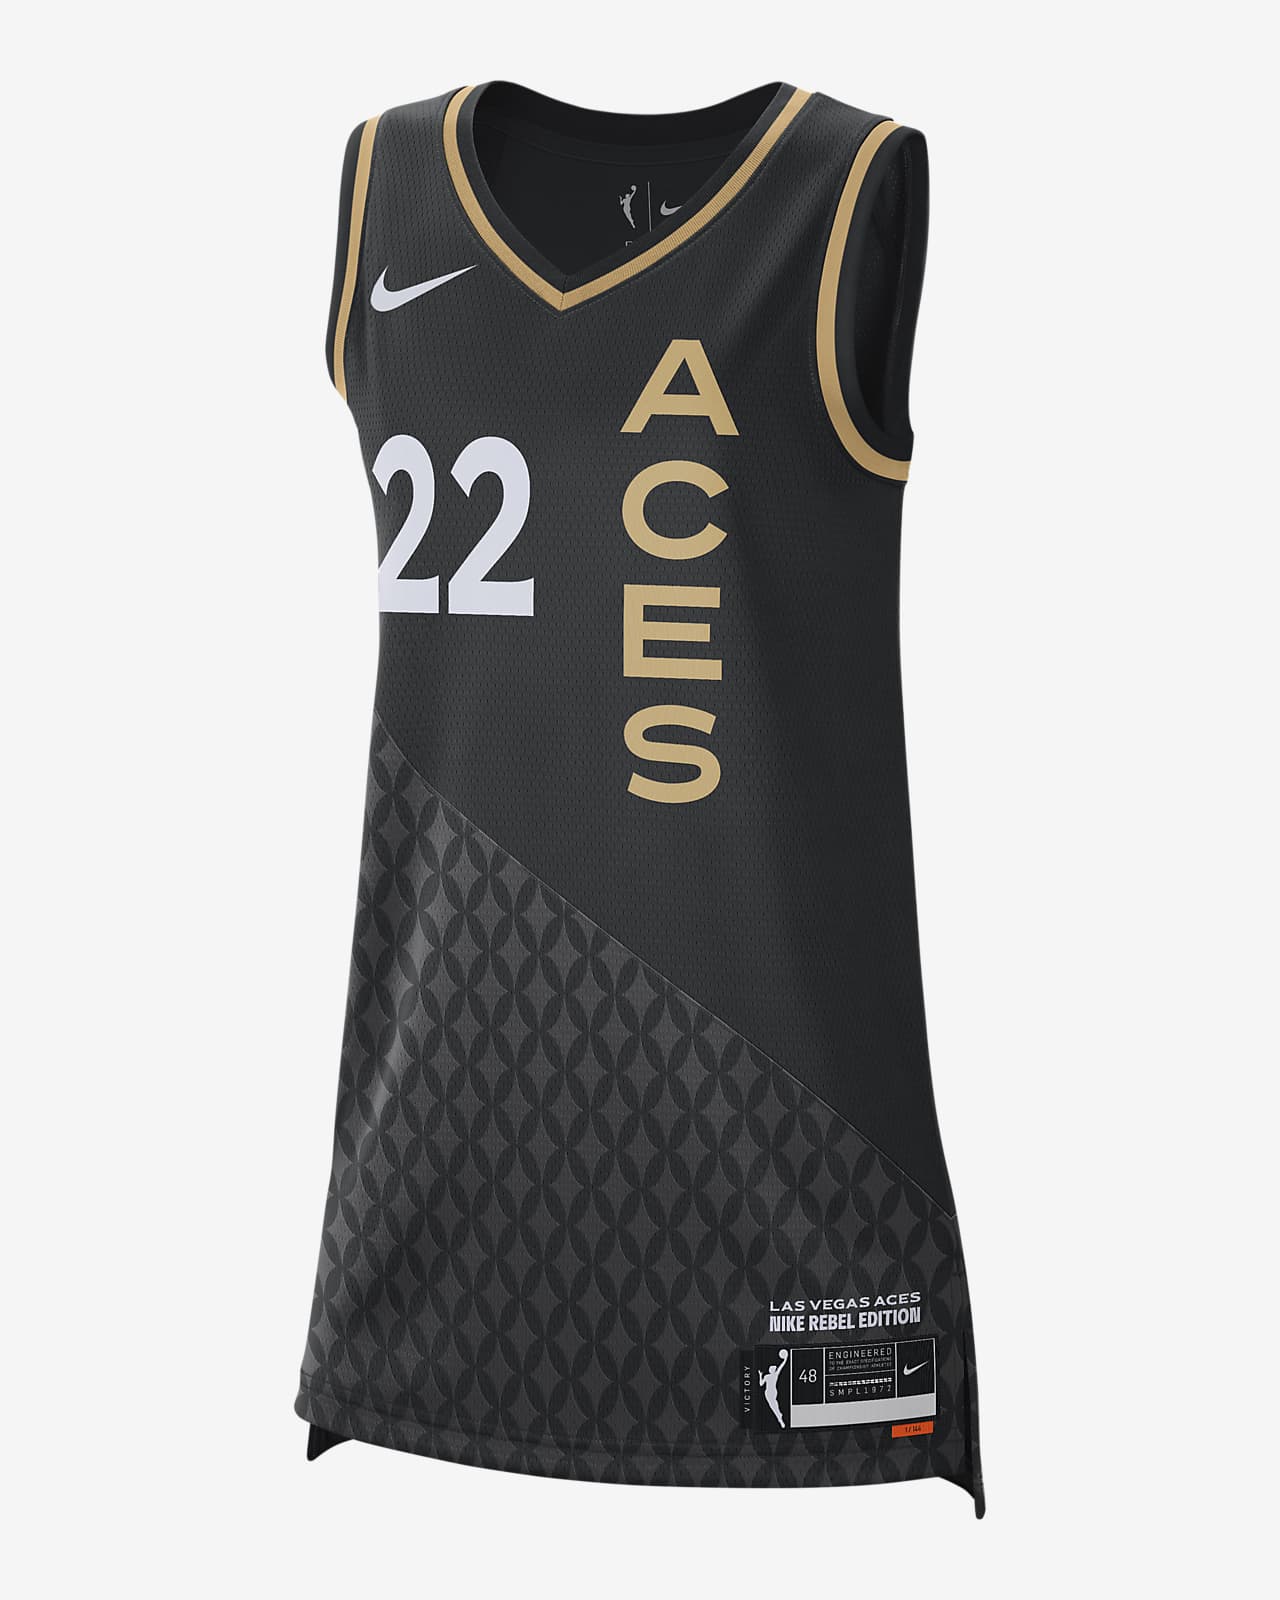 Nike WNBA “A'ja Wilson”Las Vegas Aces Rebel Edition Swingman Jersey